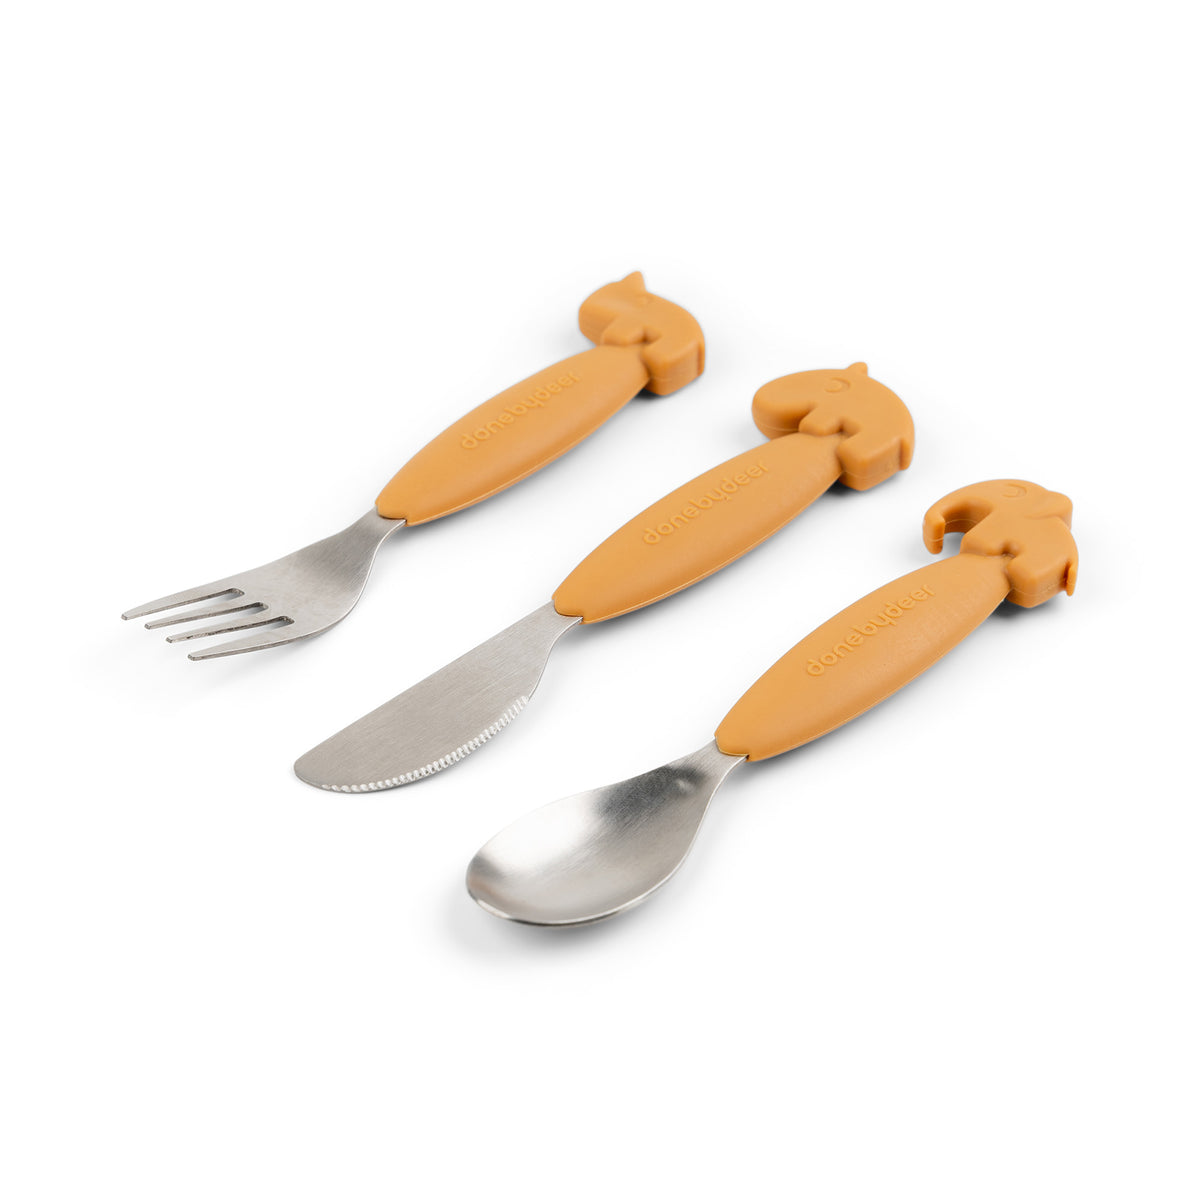 Easy-grip cutlery set - Deer friends - Mustard - Front